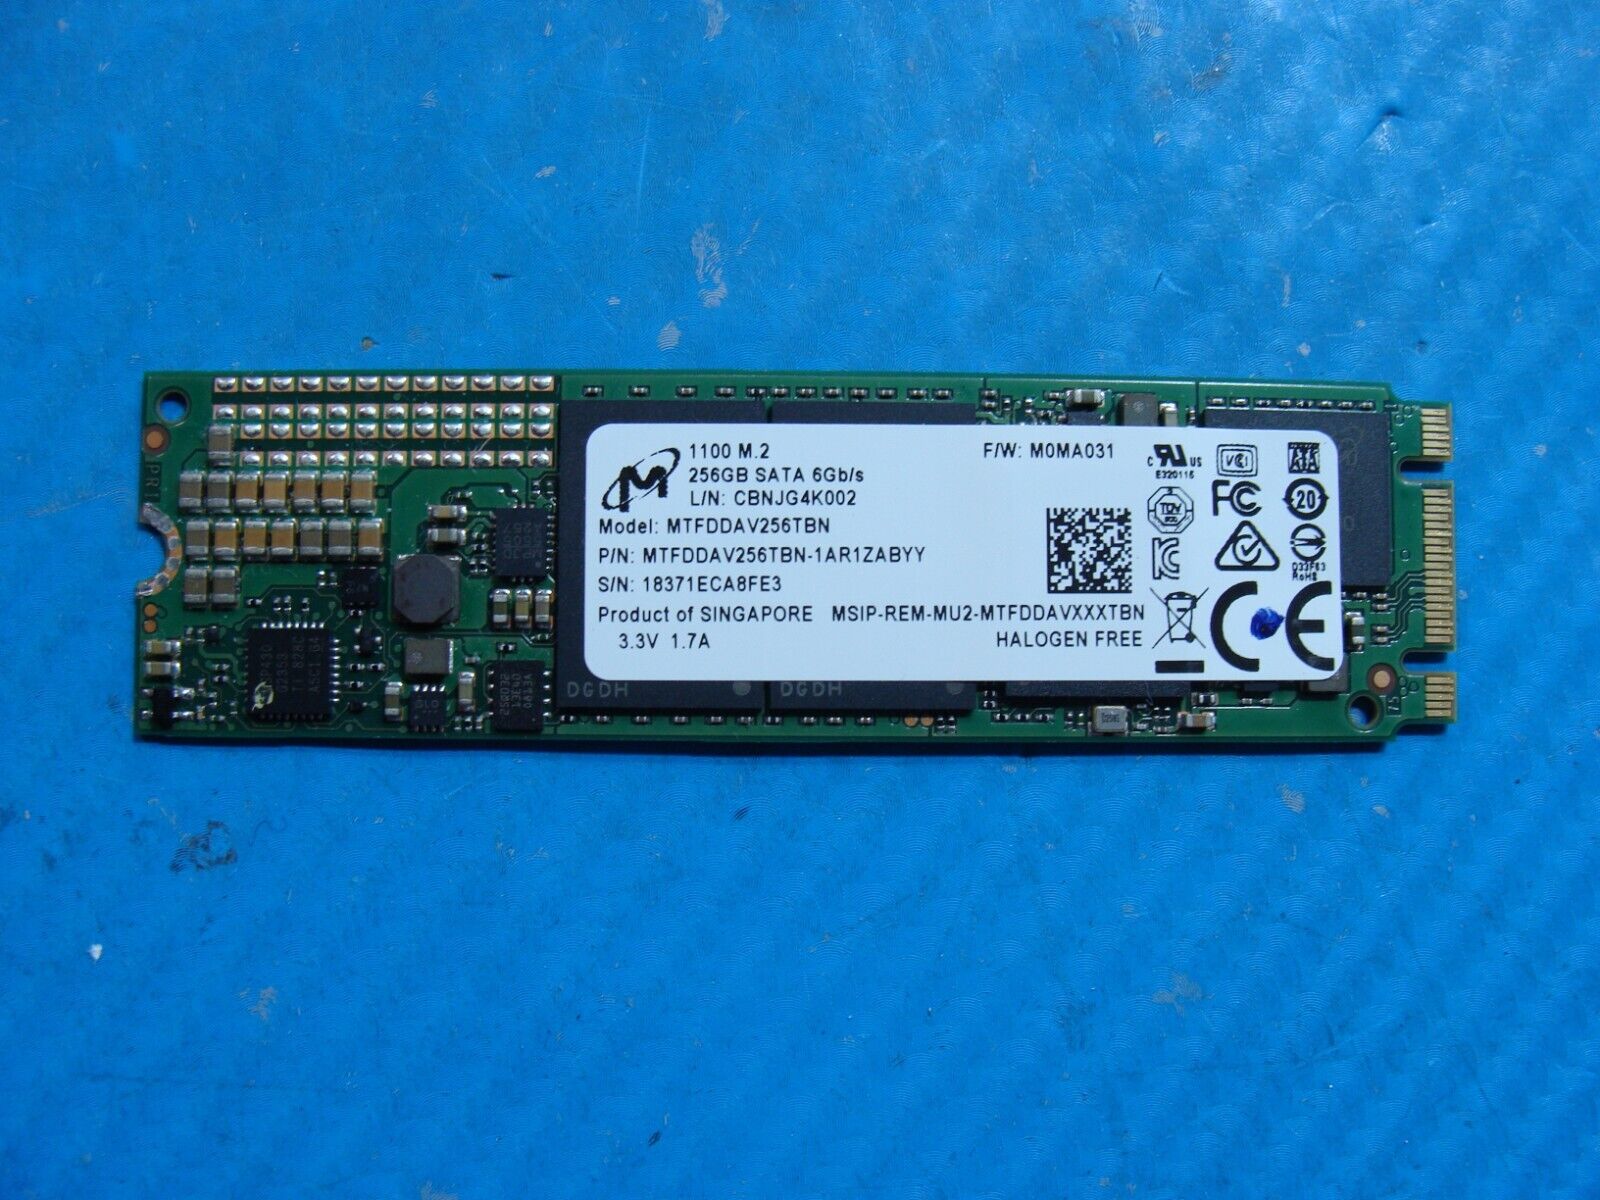 Asus UX331FAL Micron 256GB M2 SATA SSD Solid State Drive MTFDDAV256TBN-1AR1ZABYY